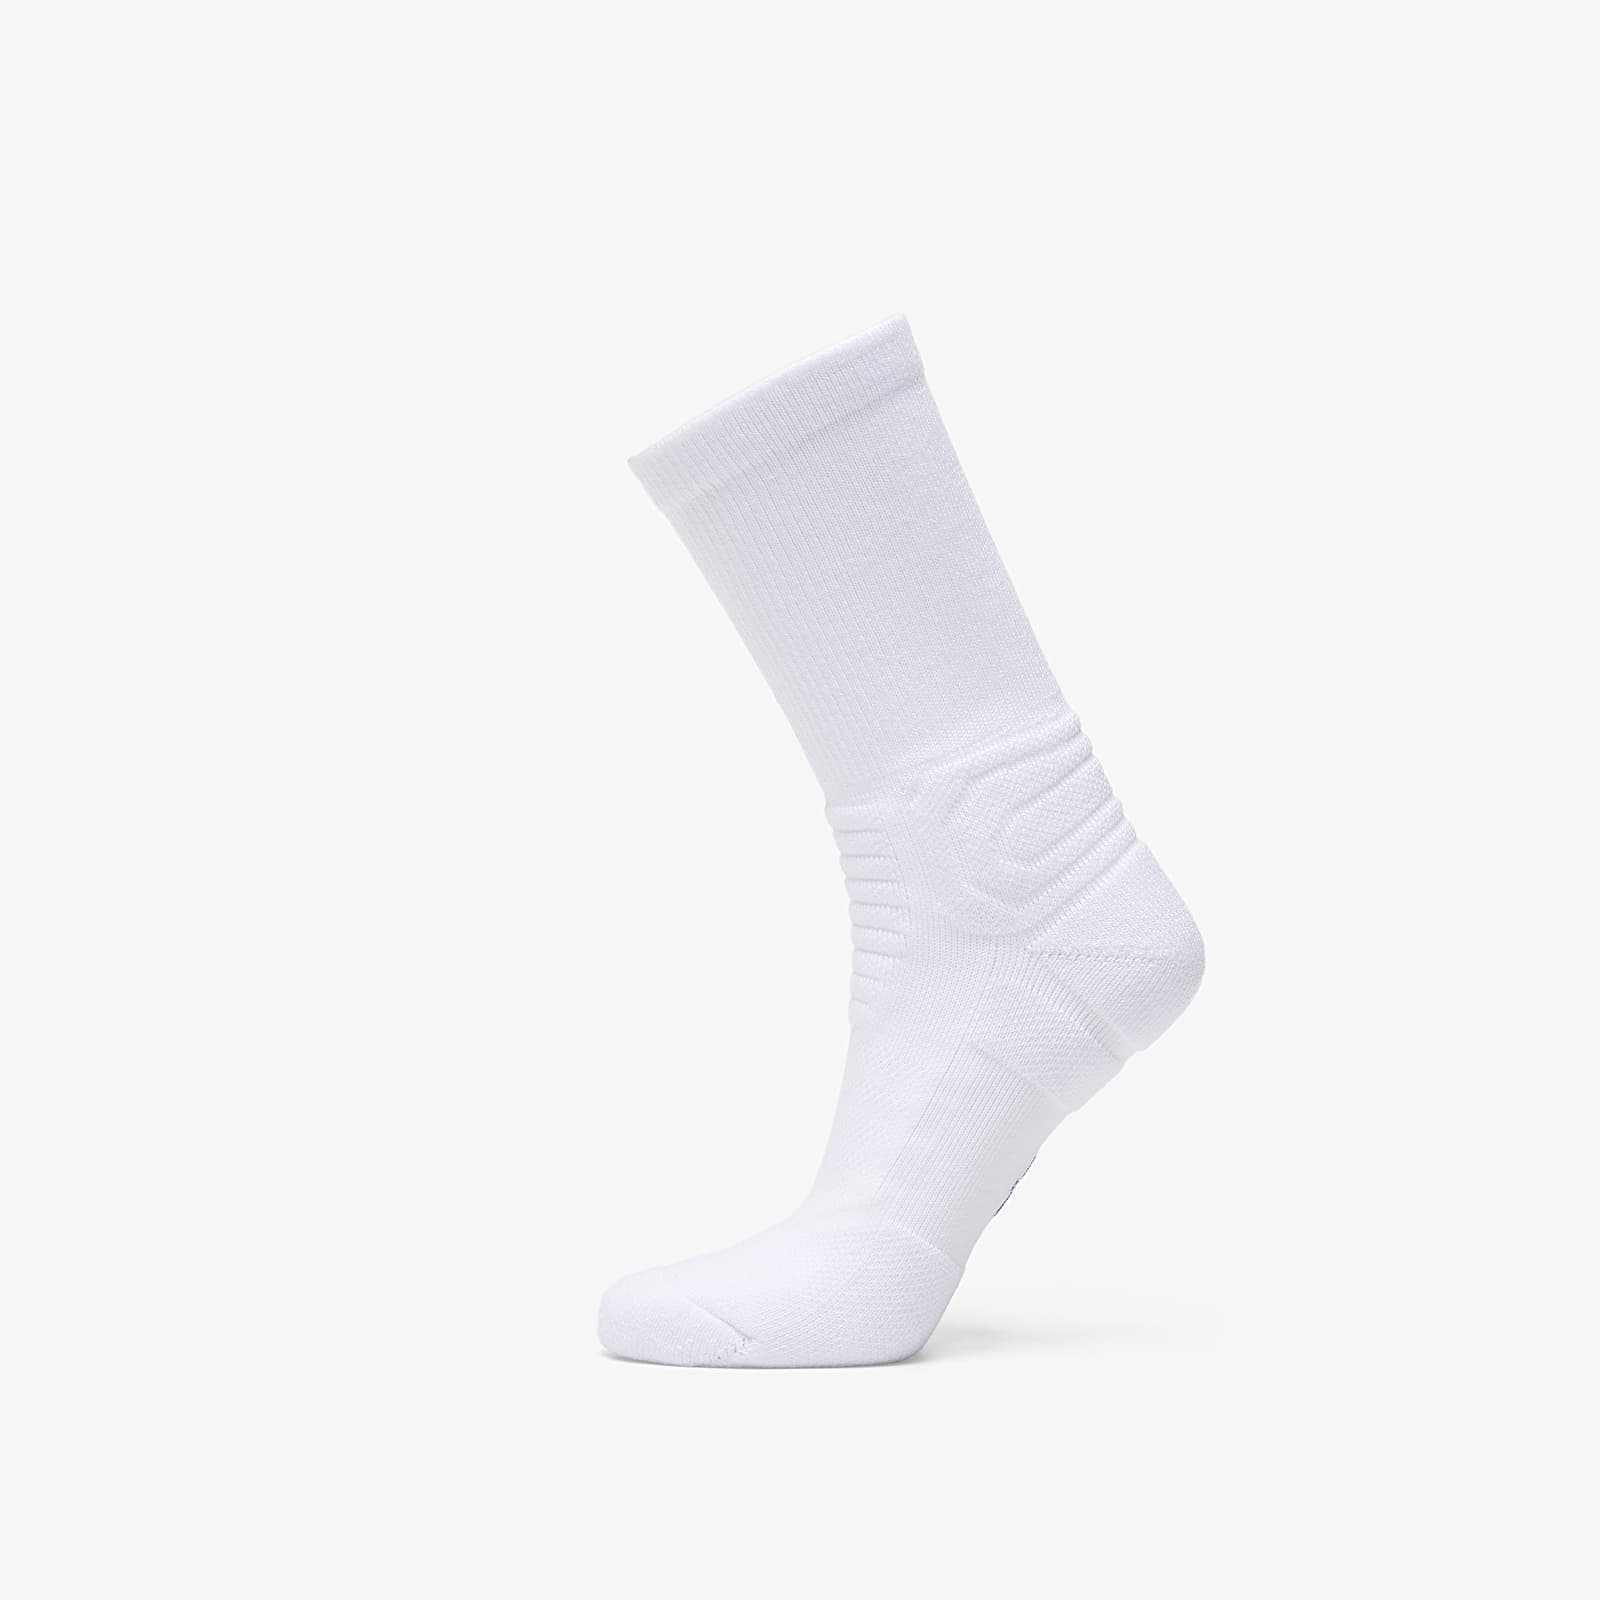 Calzetti Jordan Flight Crew Socks White/ Black